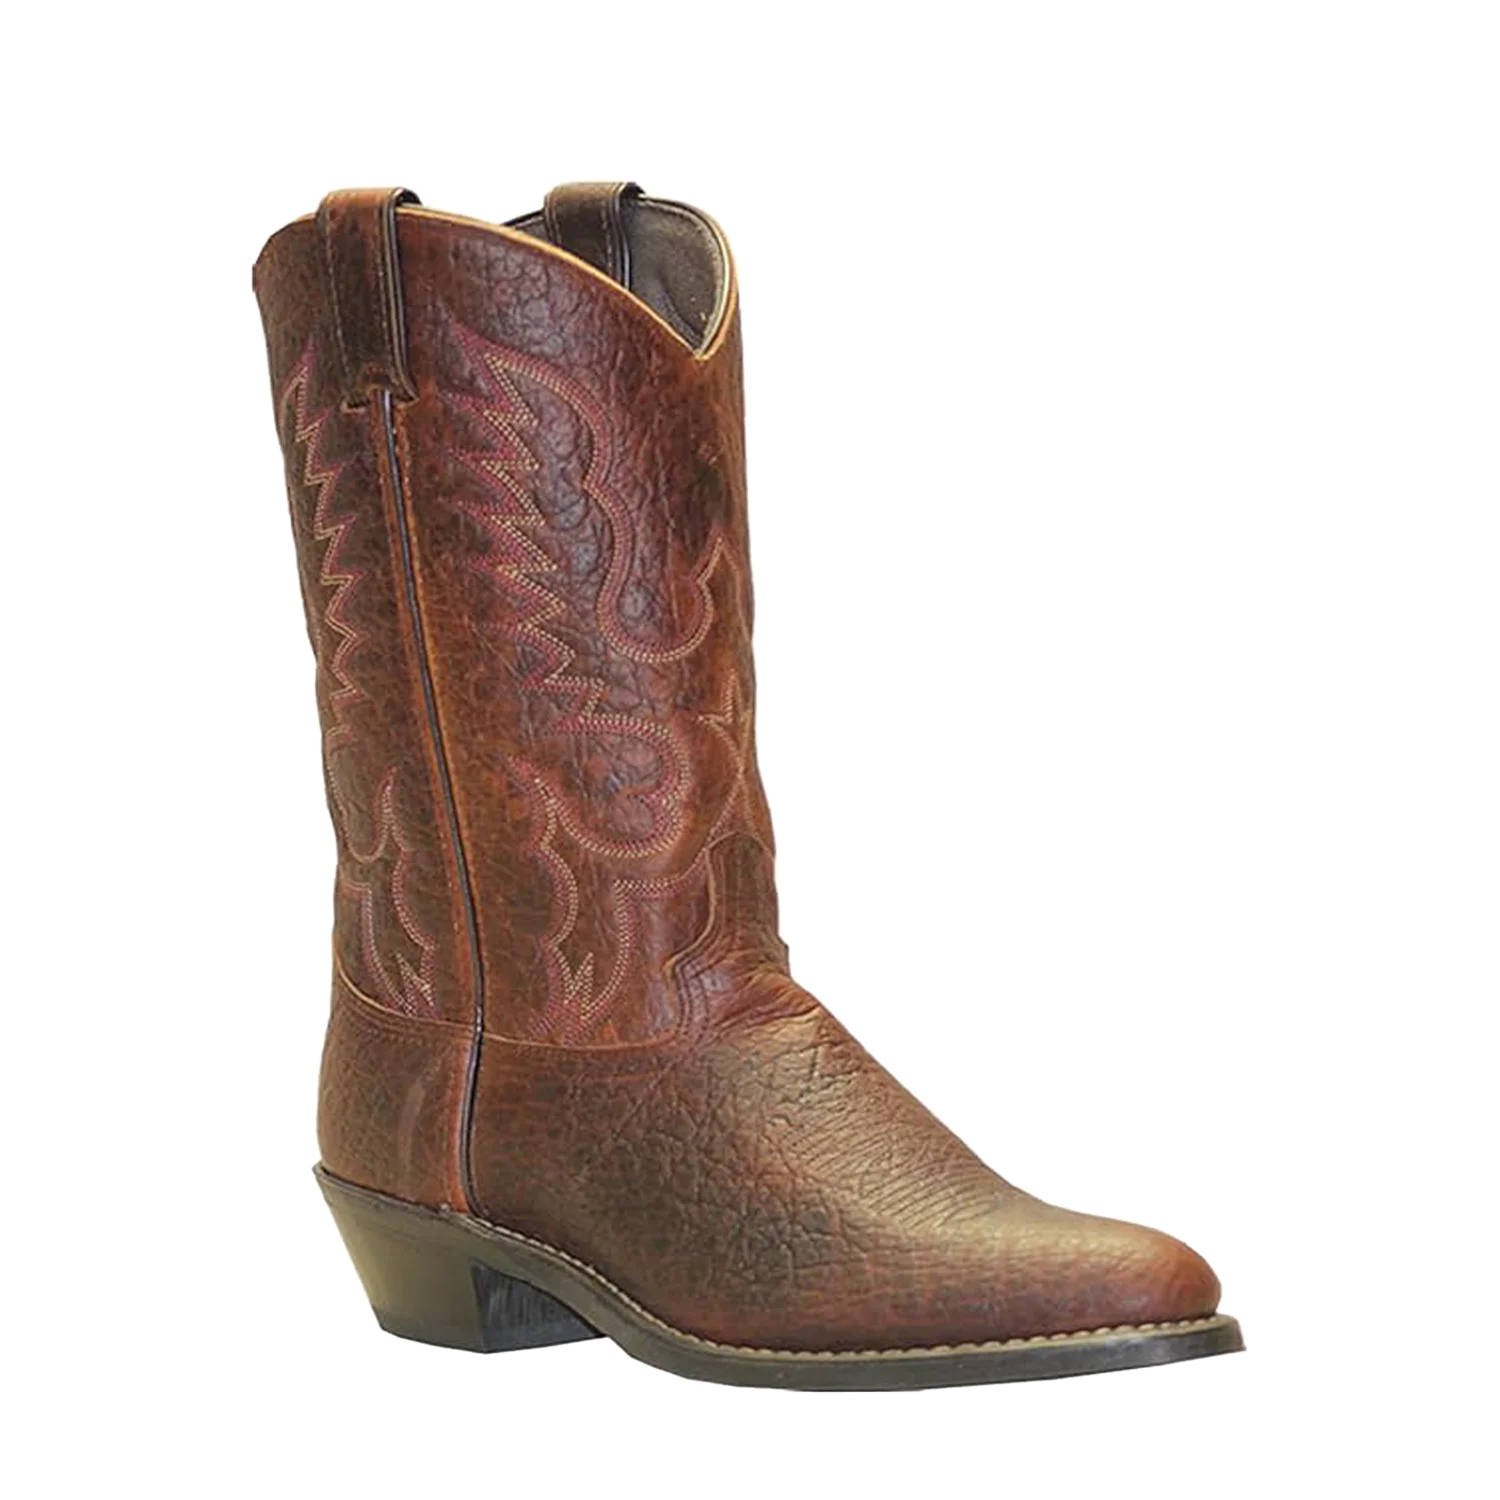 Men's Bison Leather Western Boot Medium Toe Brown 12 D(M) US
